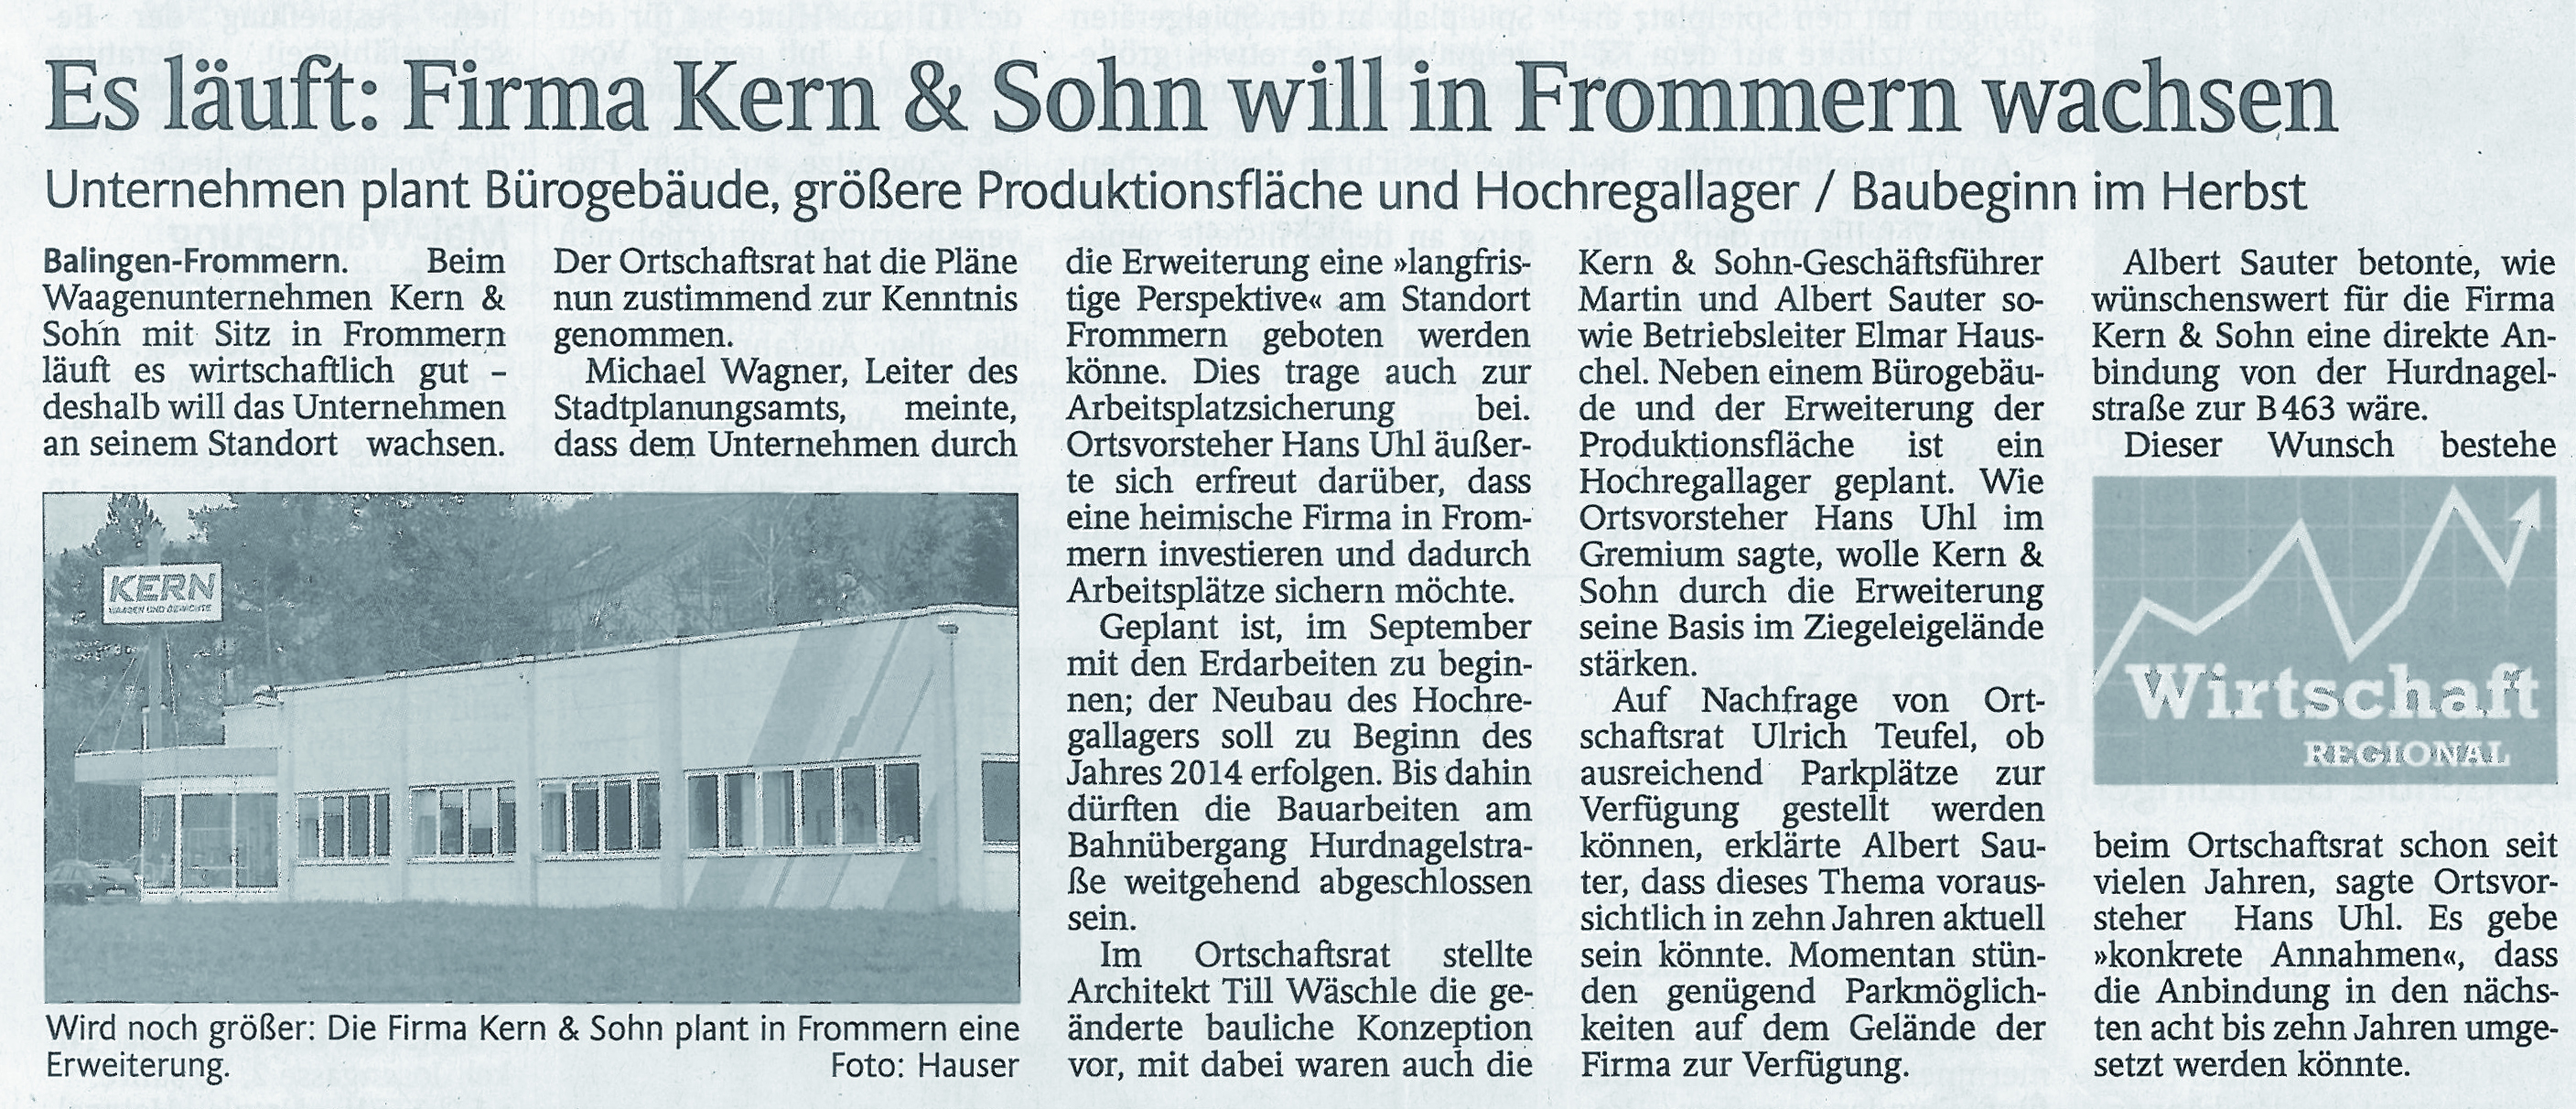 Schwarzwälder Bote, Foto: Hauser, Firma KERN & SOHN will in Frommern wachsen